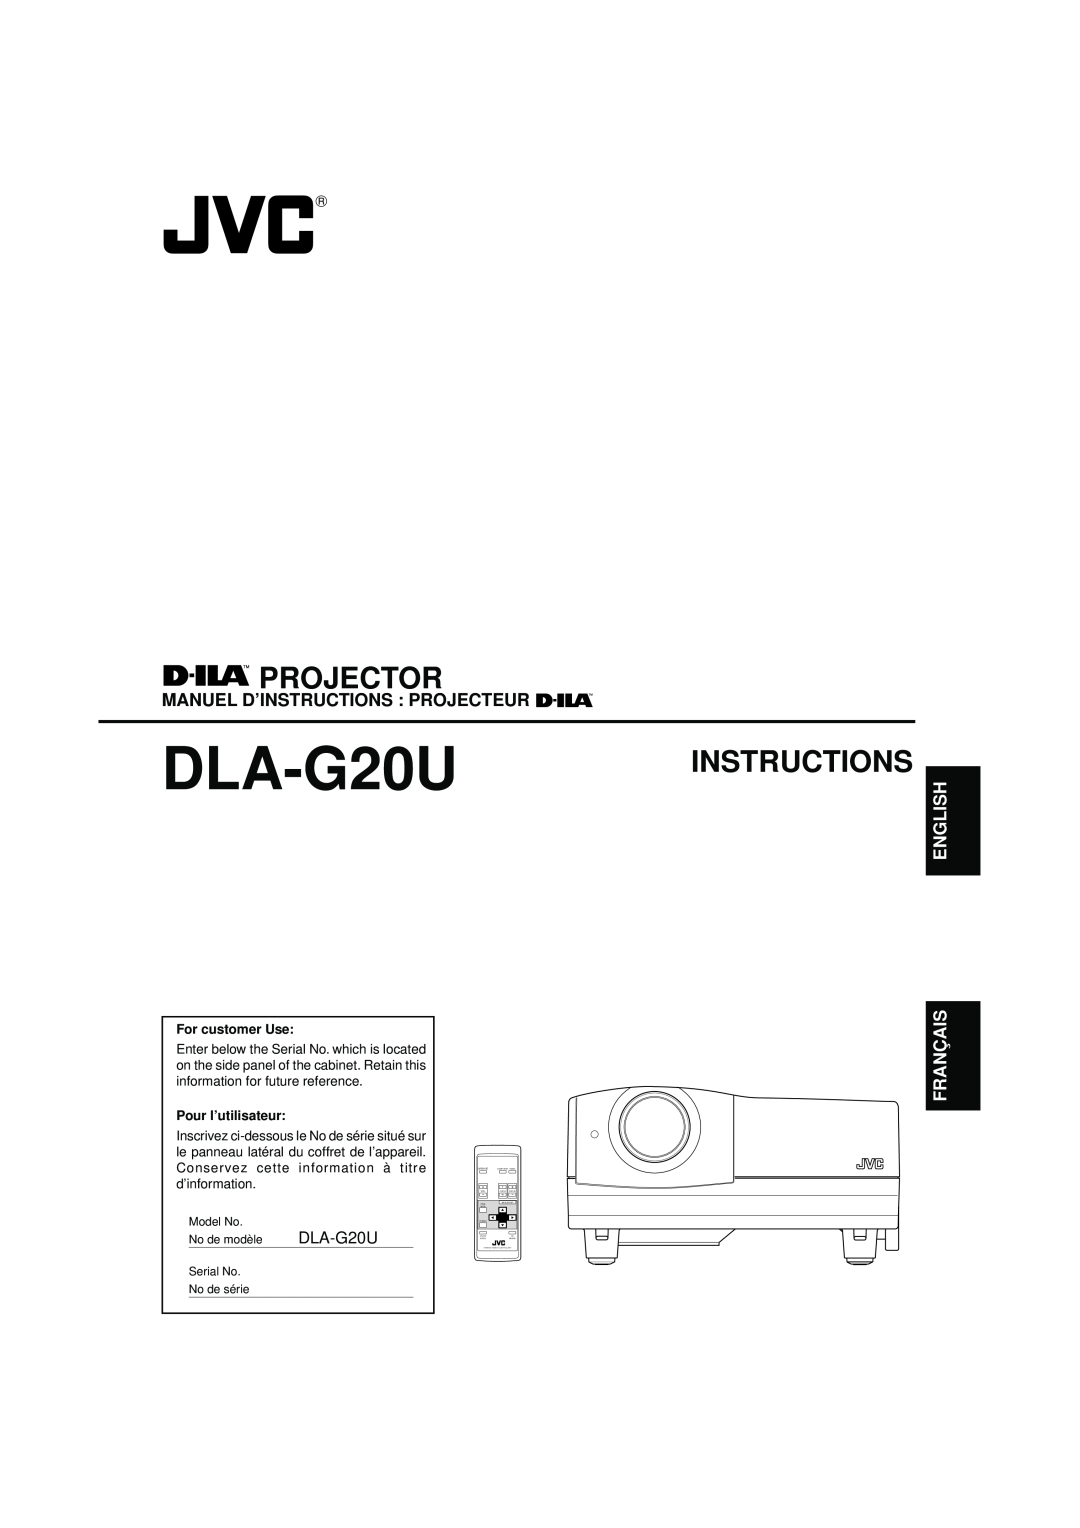 JVC DLA-G20U manual Projector, Manuel D’Instructions Projecteur, English, Français, For customer Use 